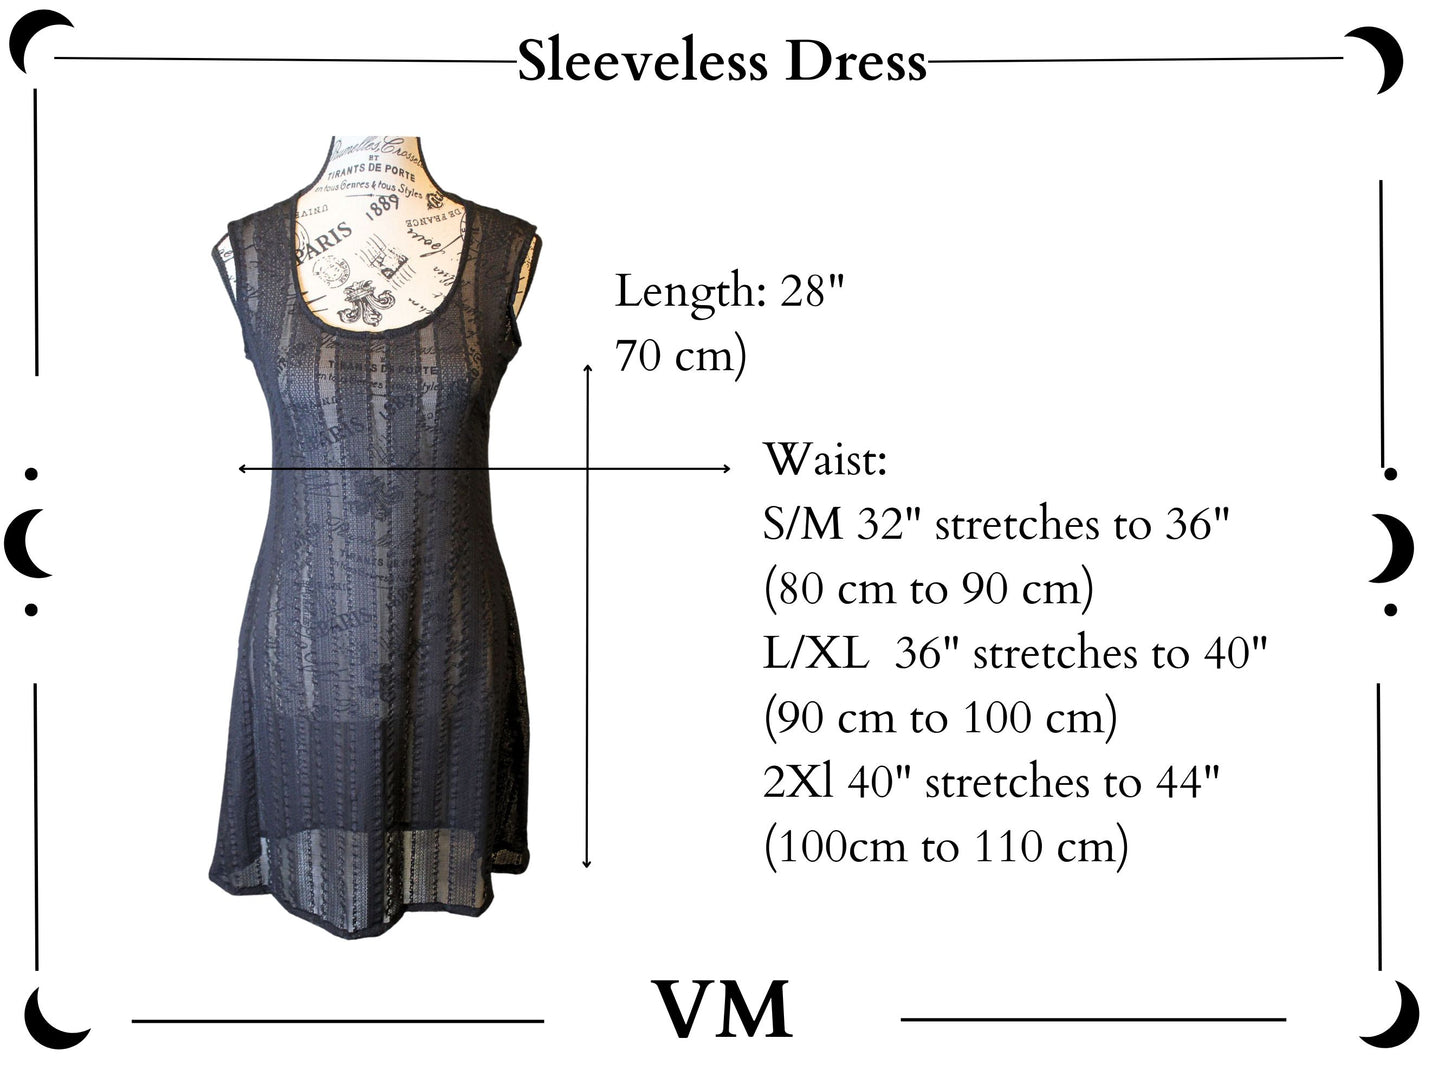 The VM Short Lace Vamp Dress